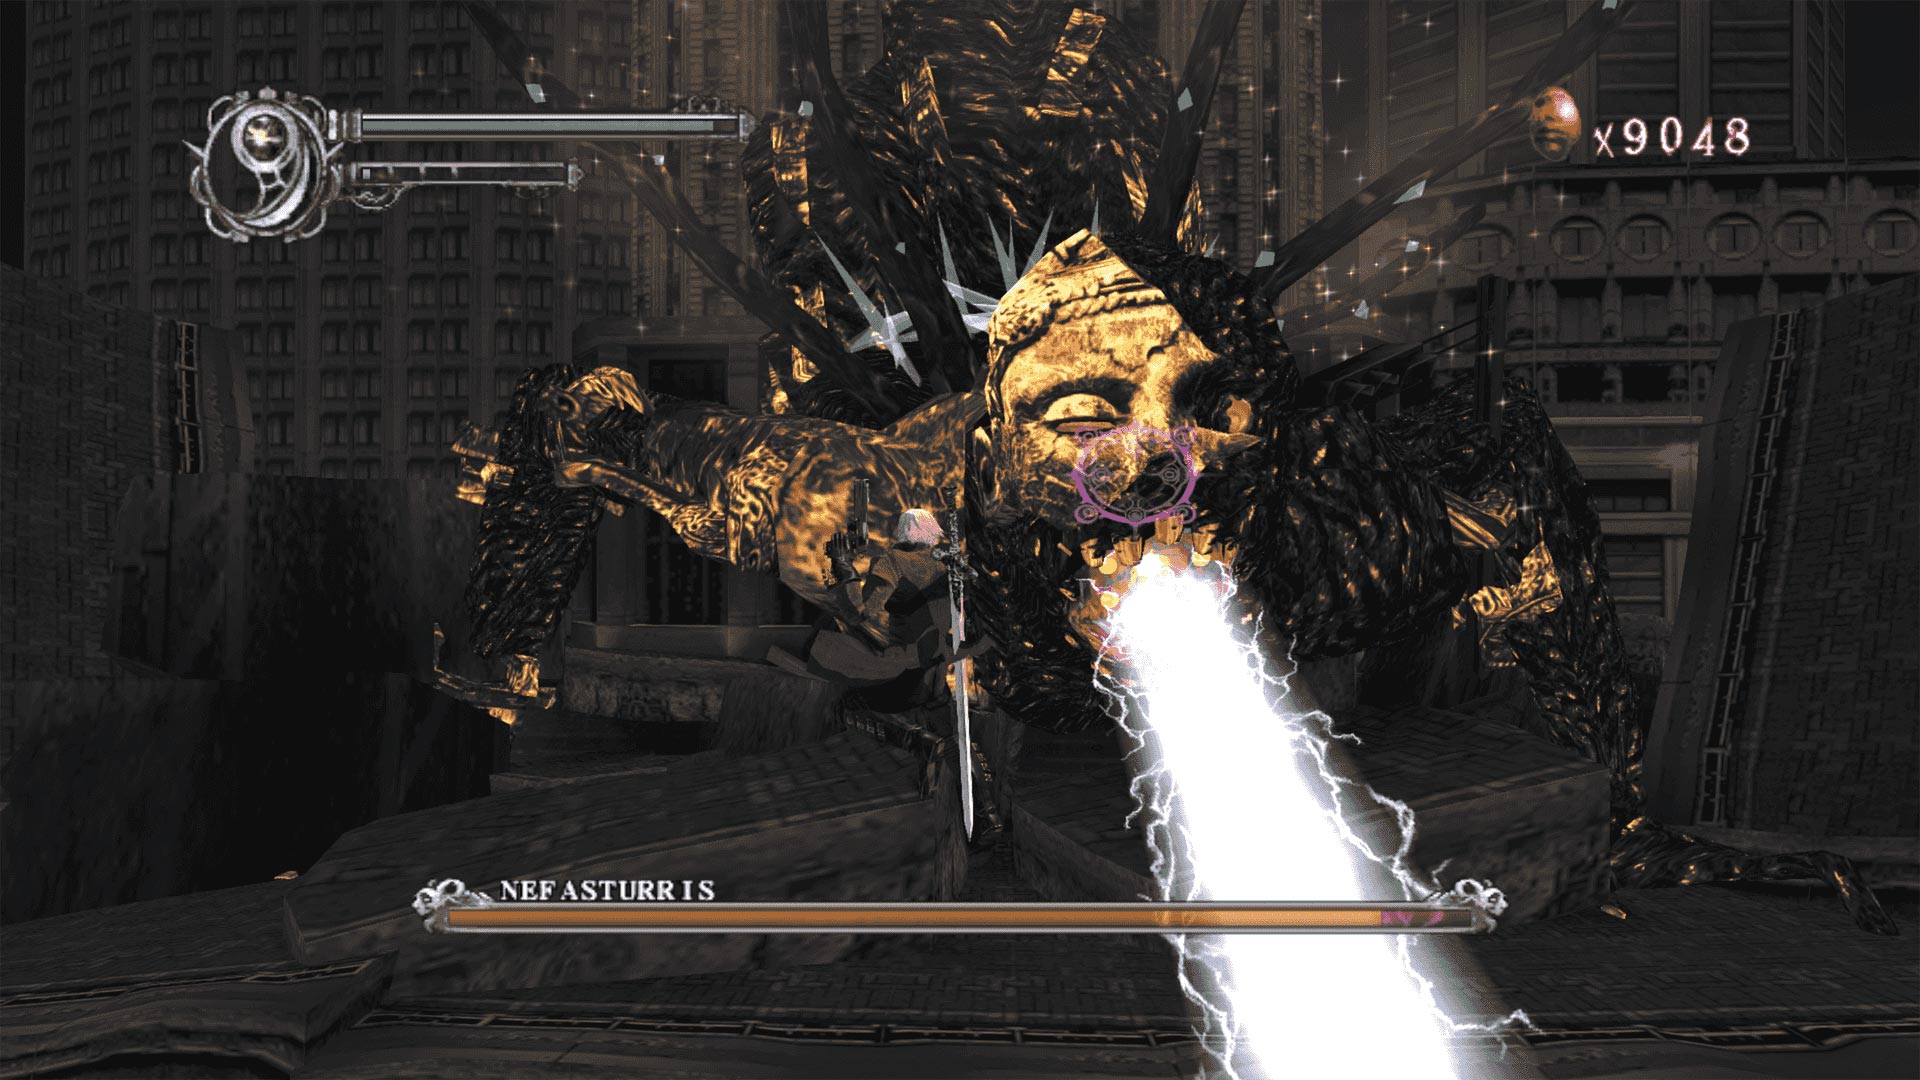 Devil May Cry HD Collection PS4 Mídia Digital Promoção - Raimundogamer  midia digital